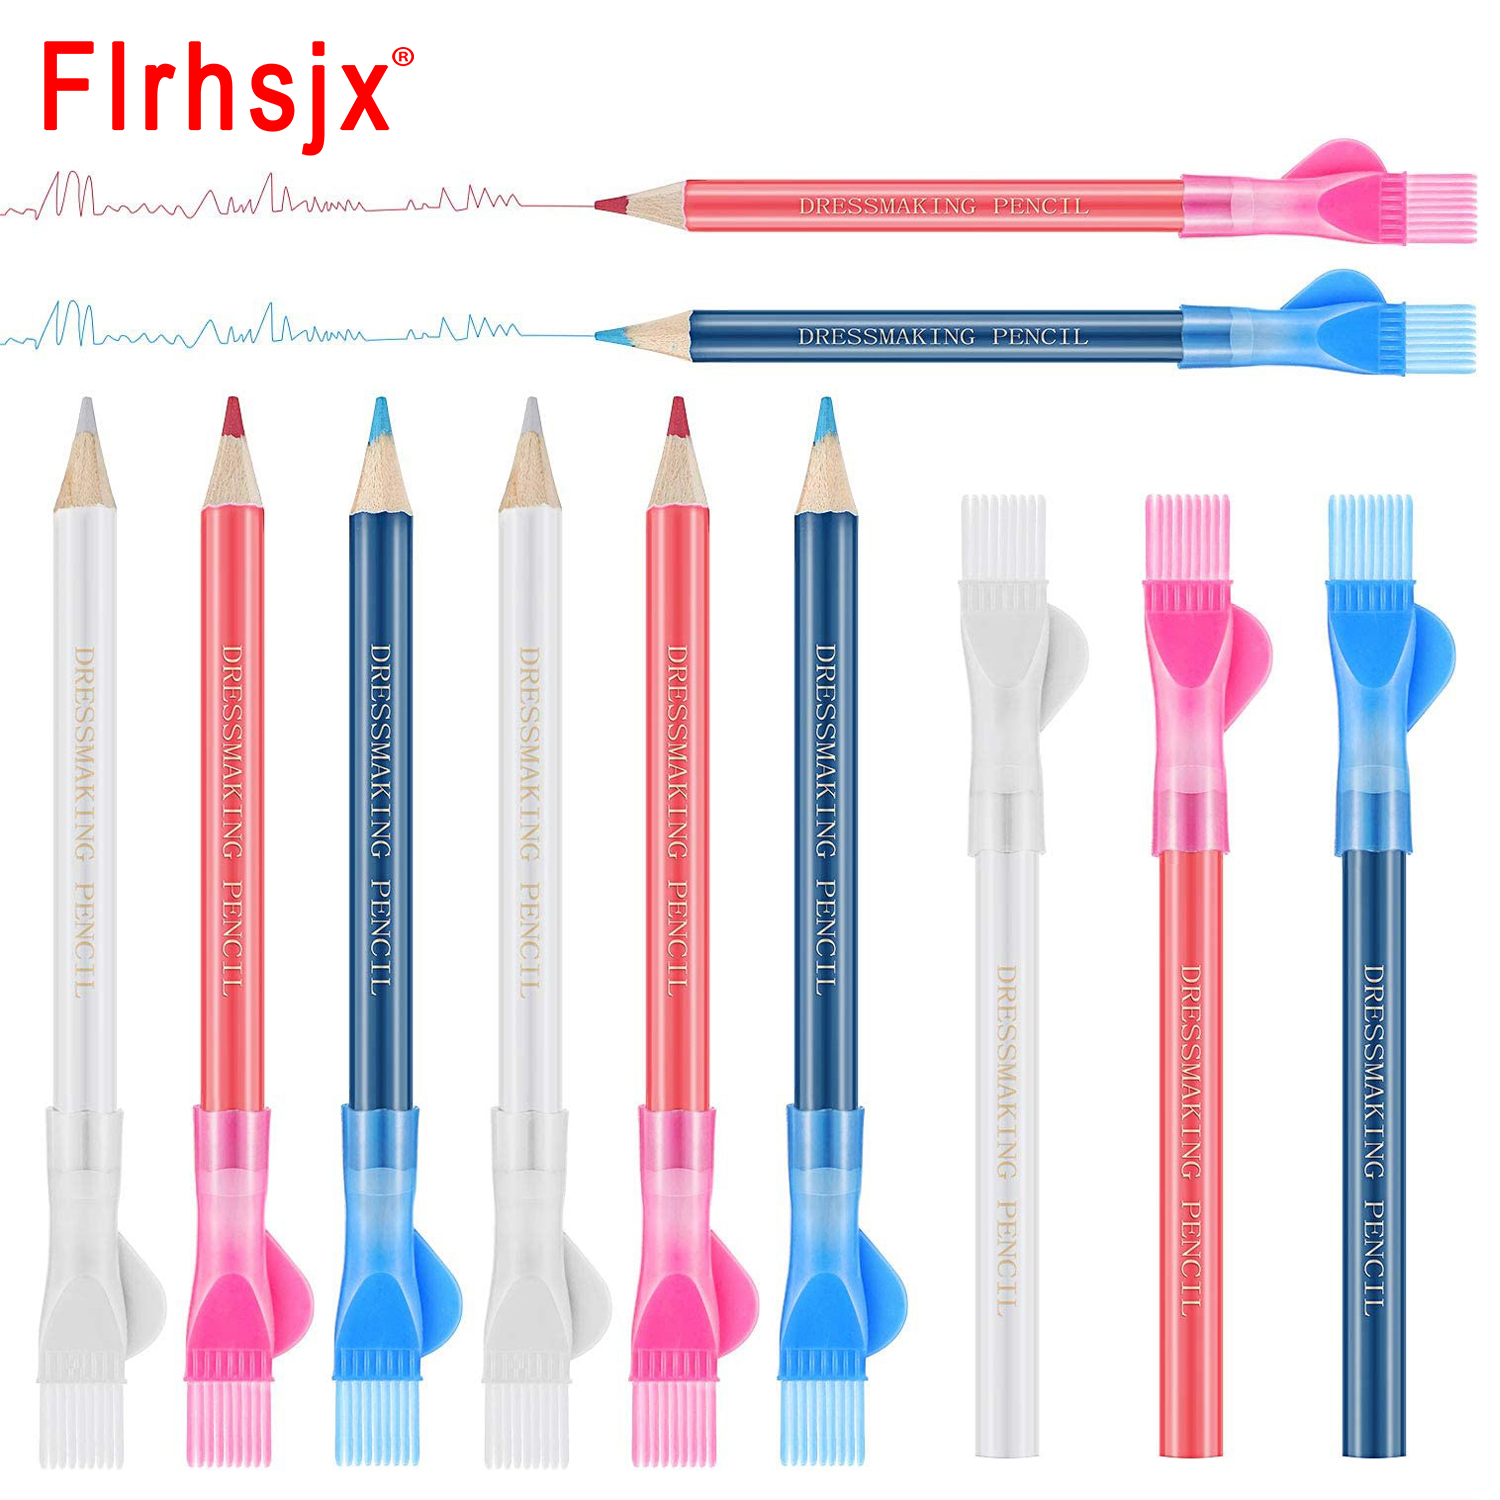 Flrhsjx 3 / crayons de couture crayons de tissu à eau